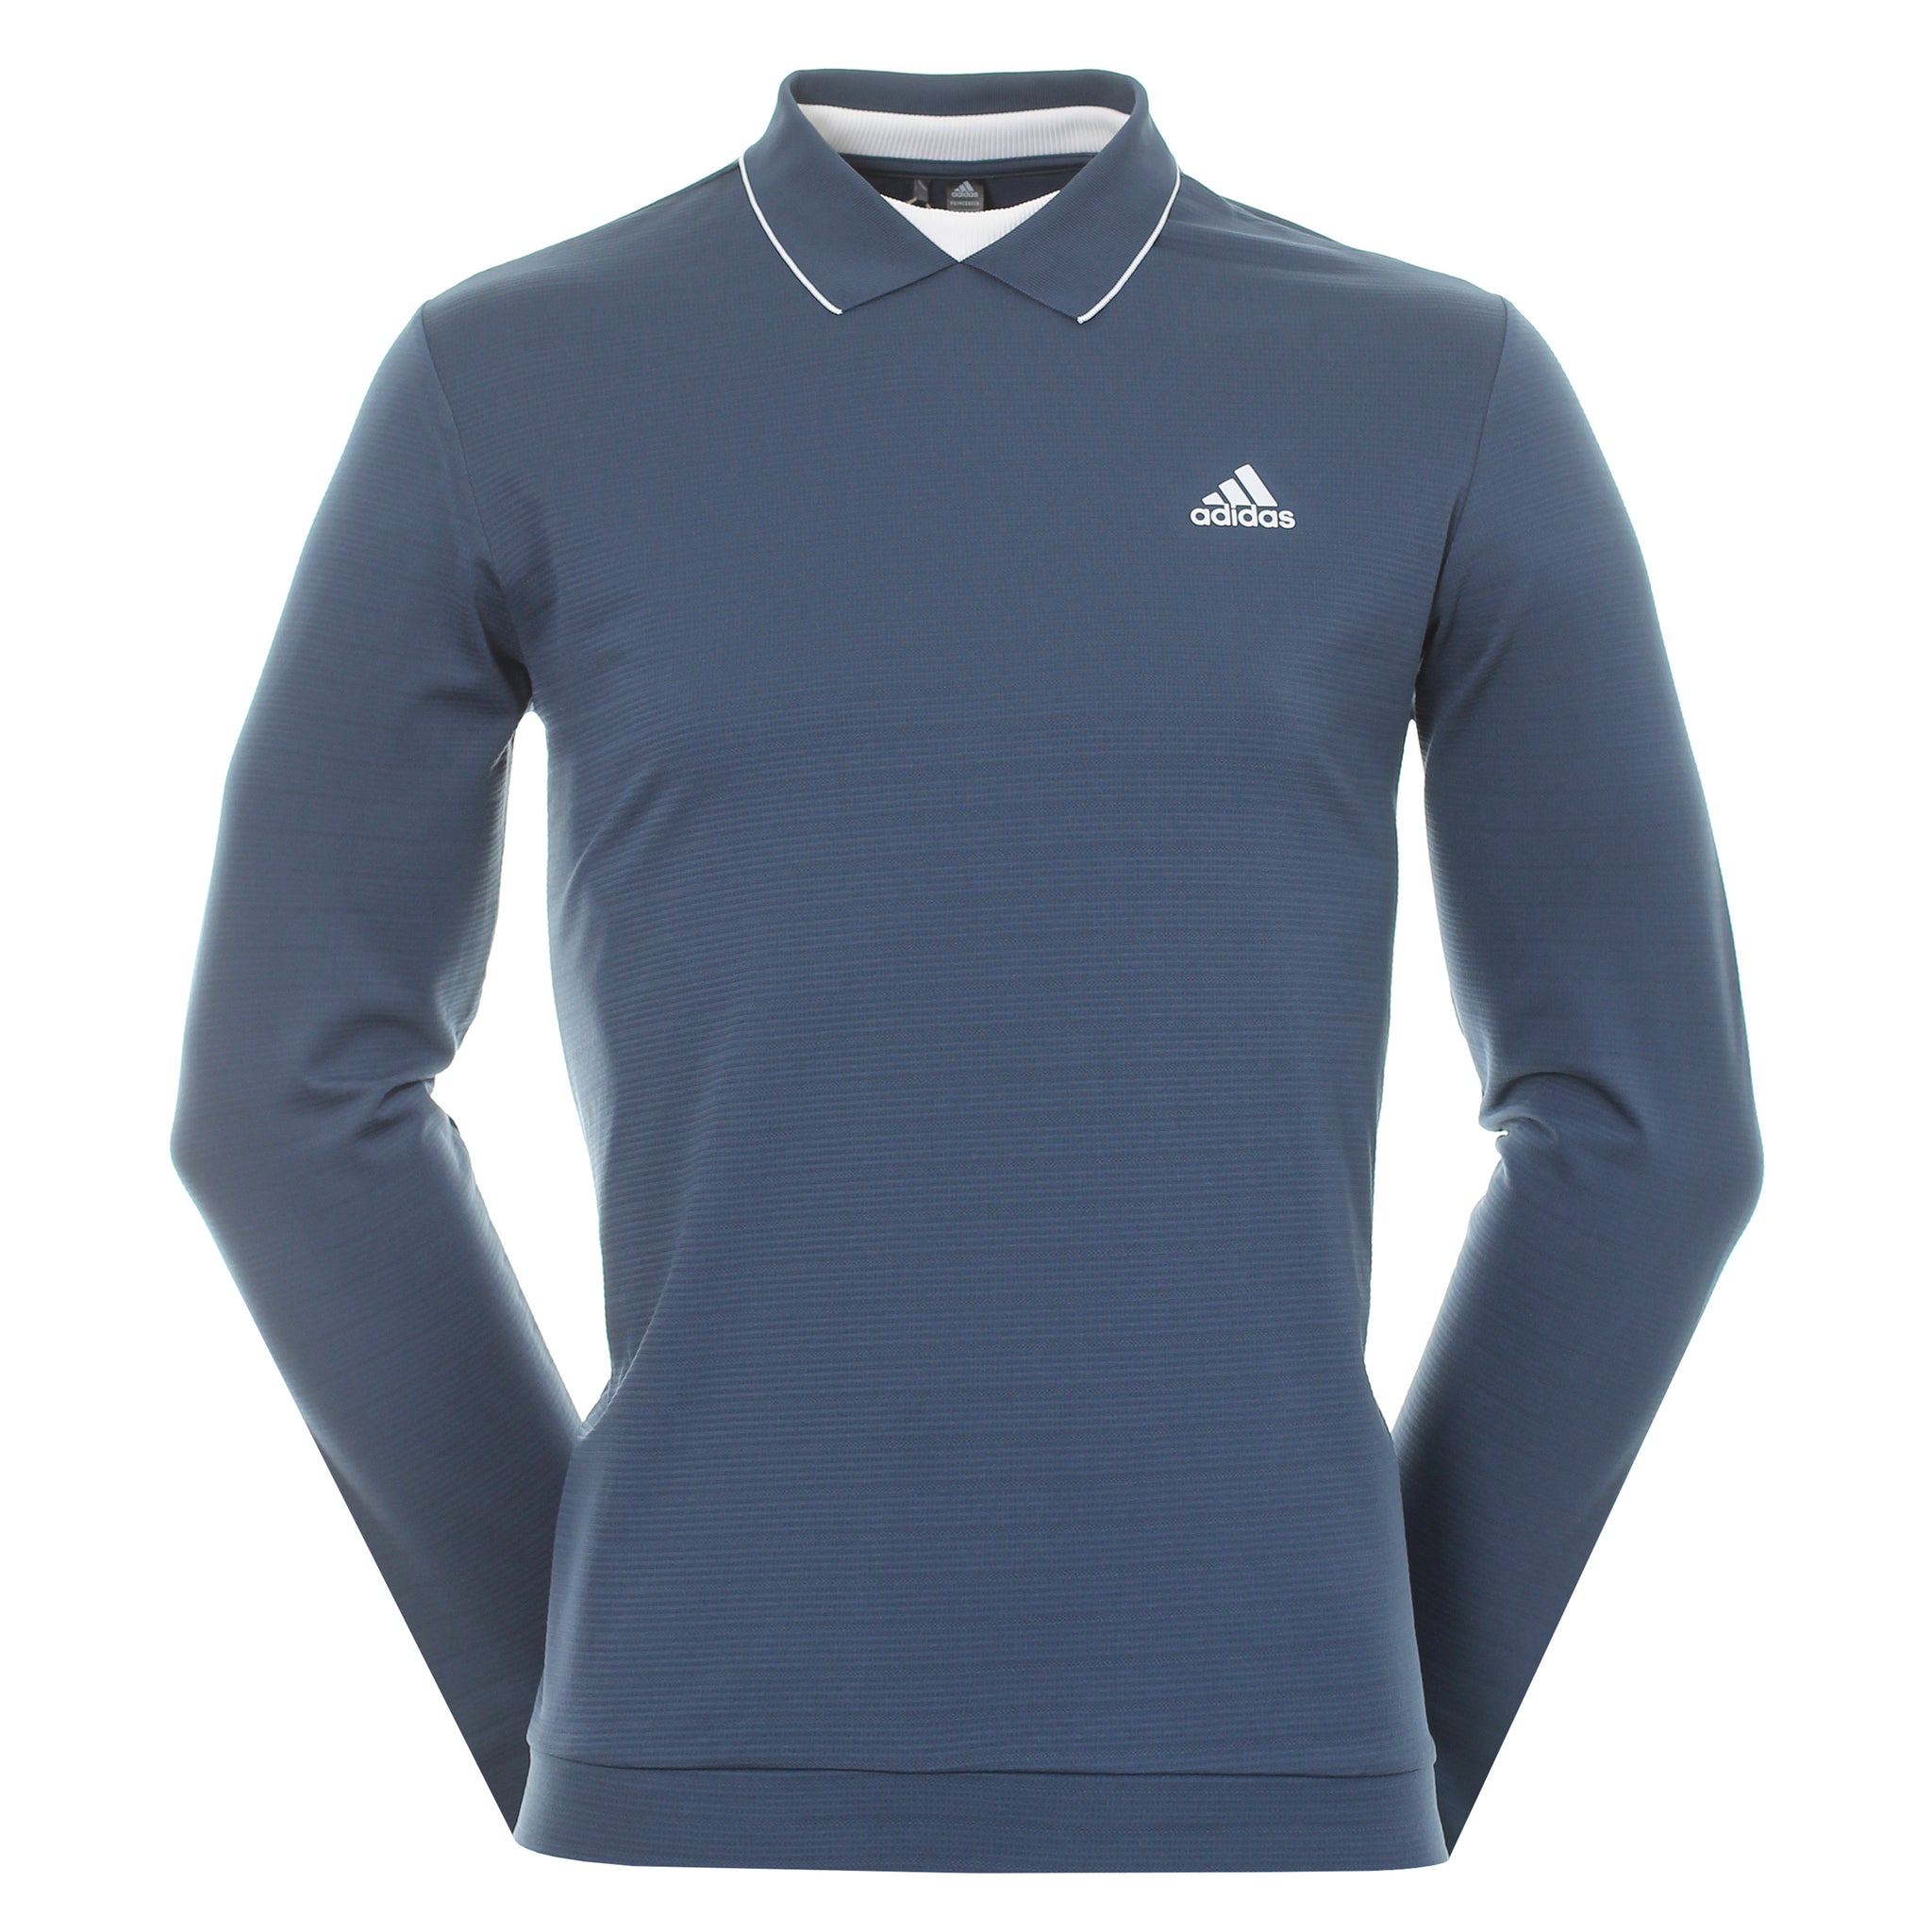 adidas Golf Thermal Long Sleeve Shirt